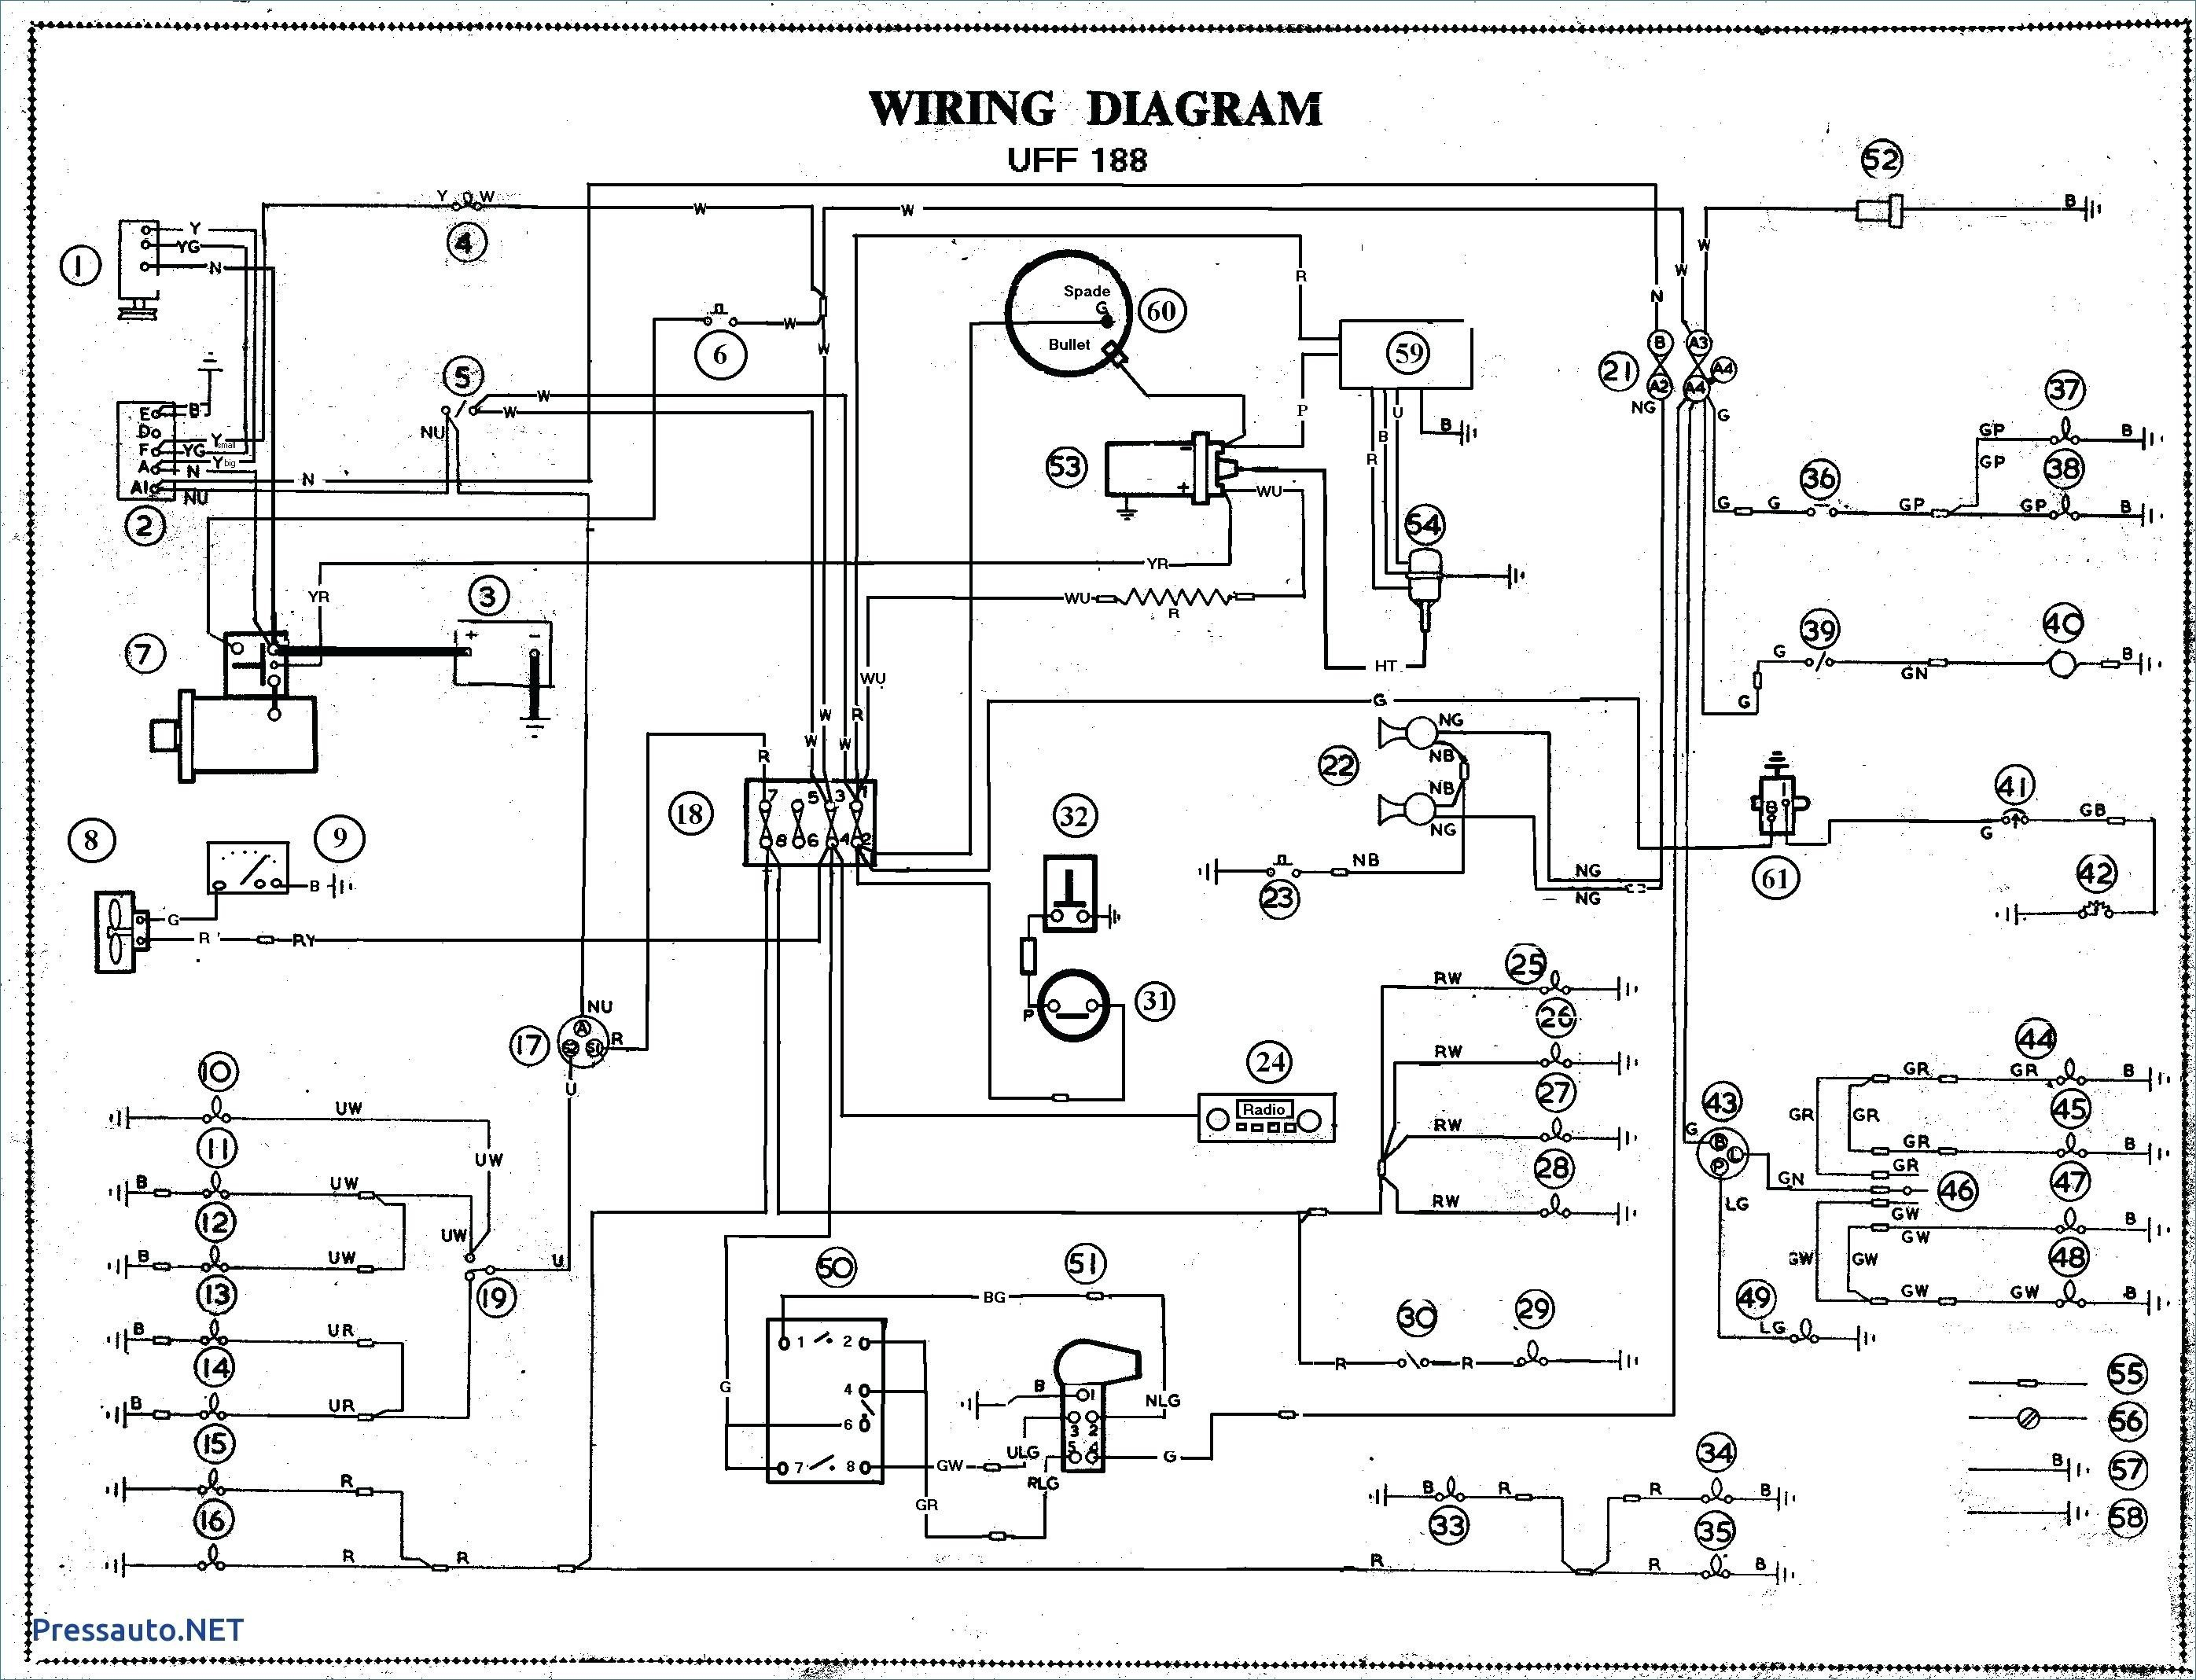 Bulldog Security Wiring Diagram Best Of Car Diagrams Random - Bulldog Security Wiring Diagram